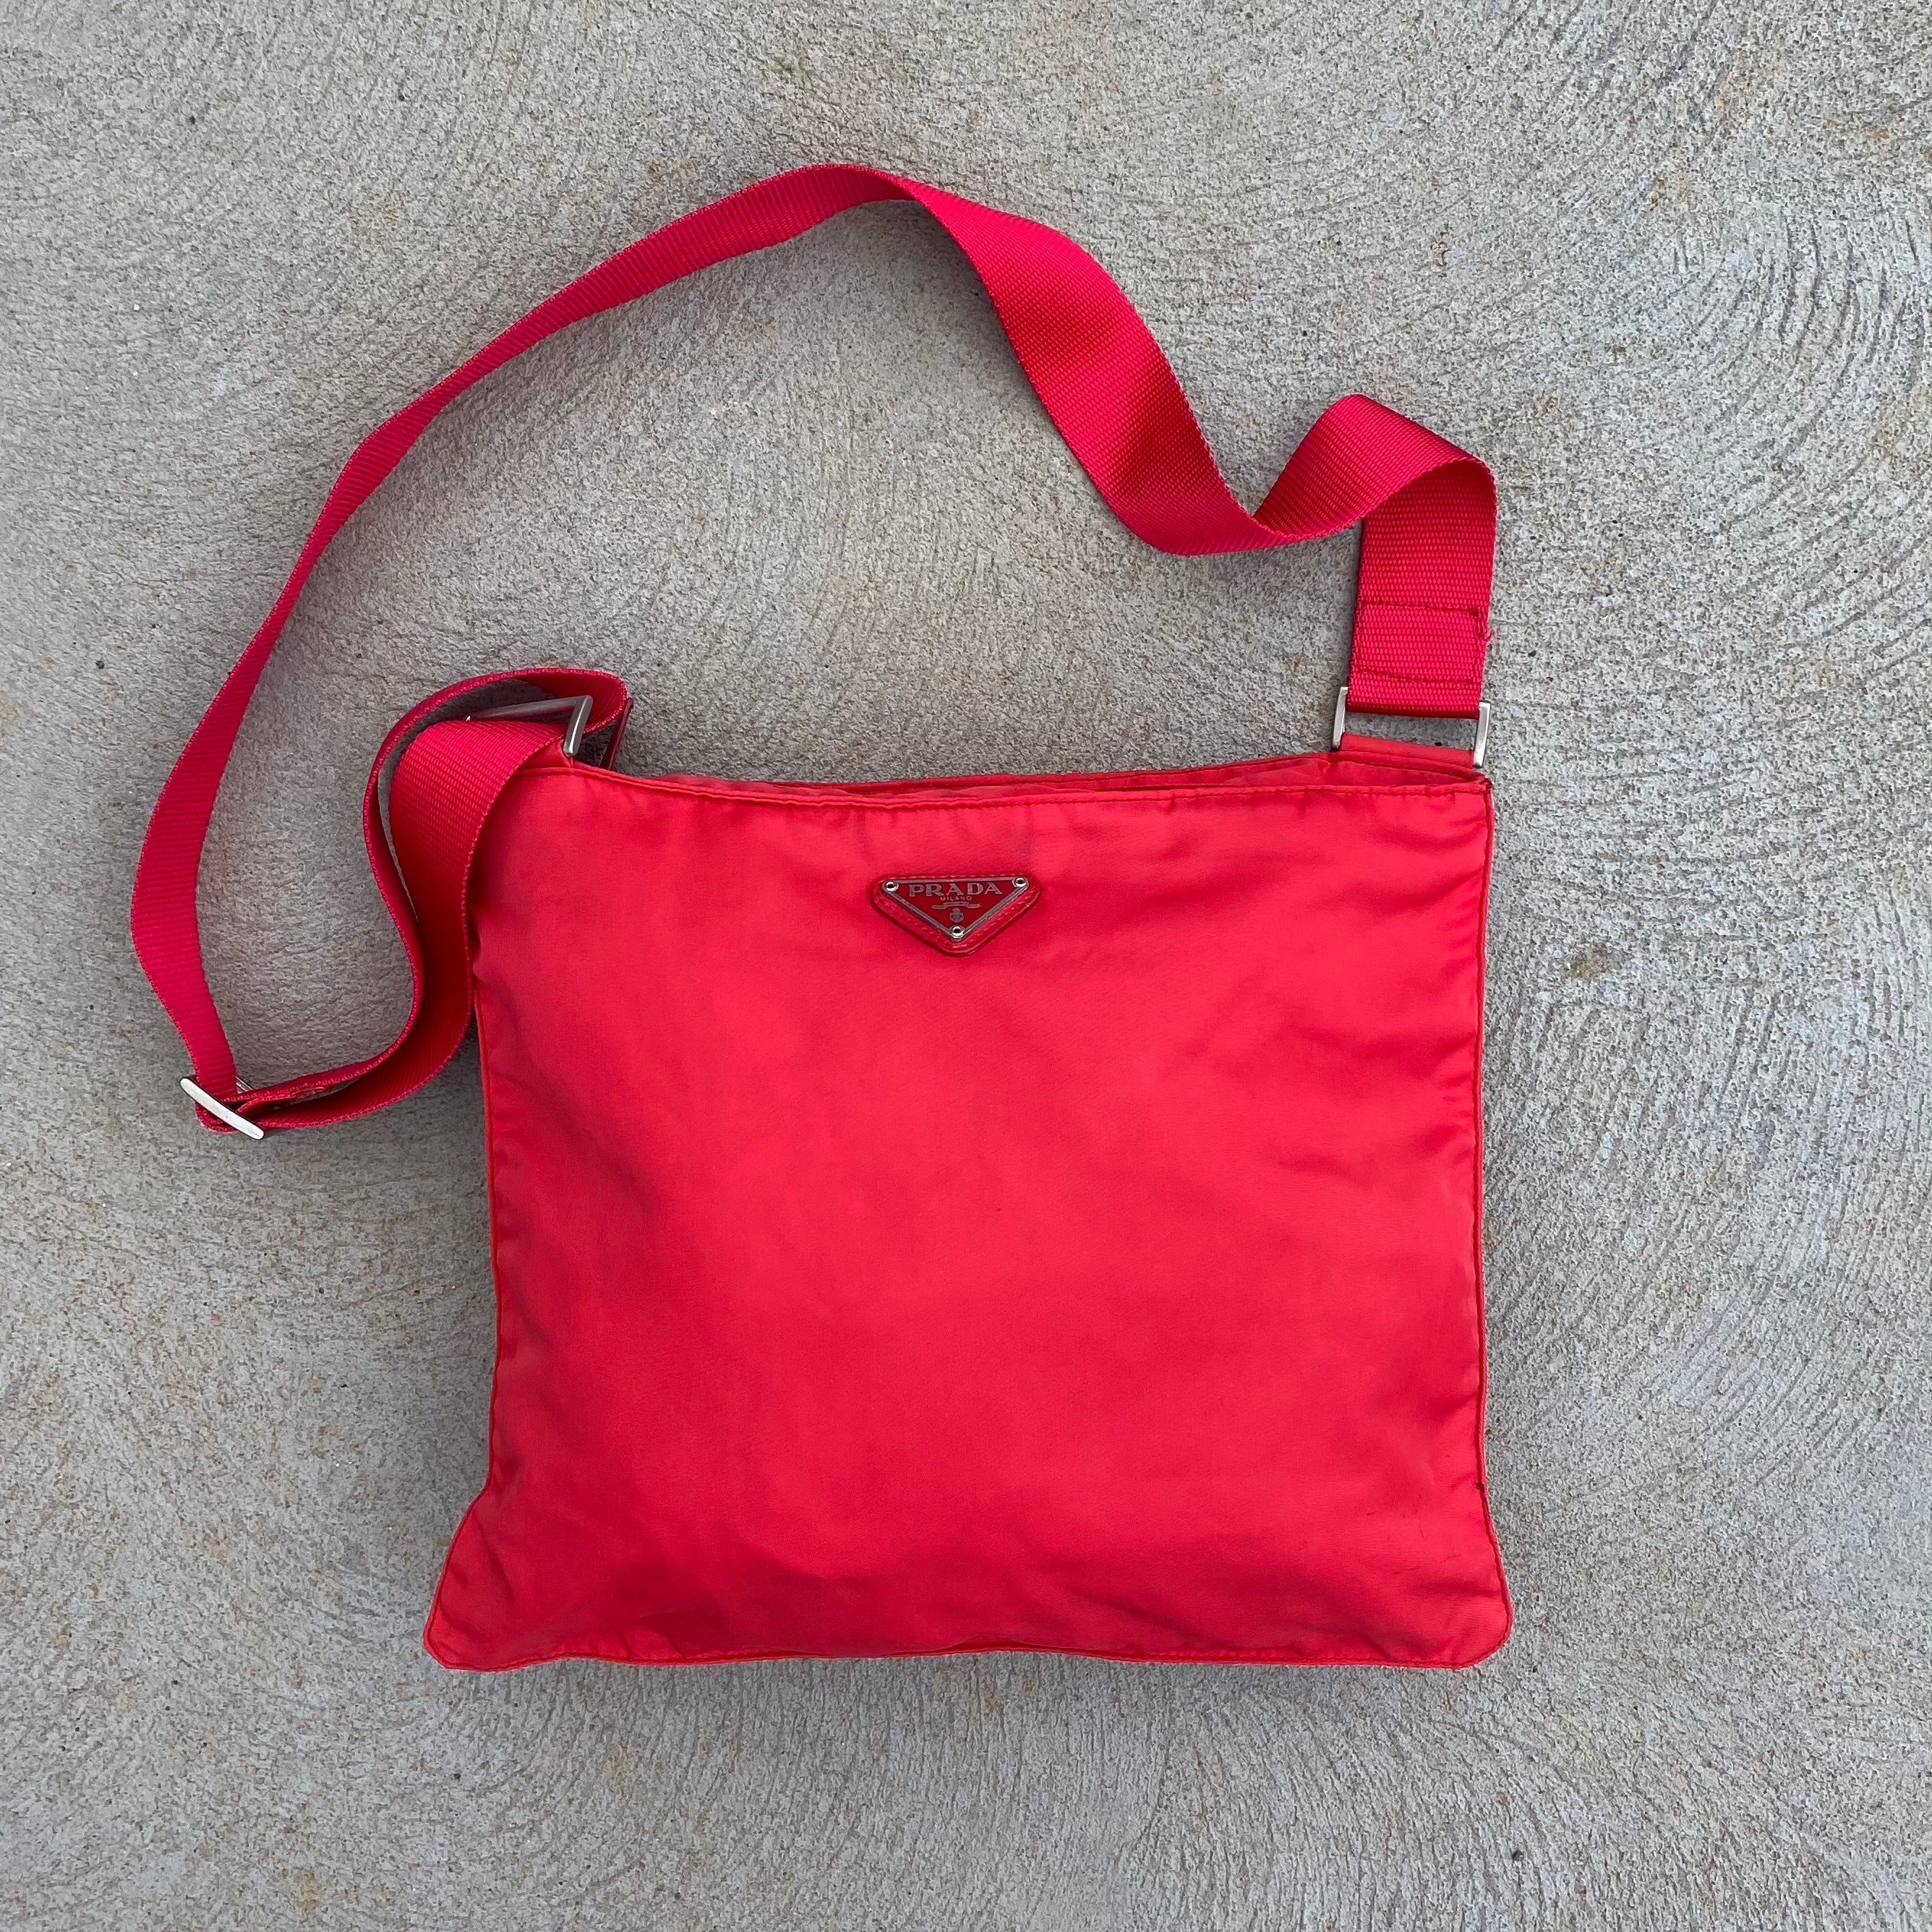 Prada Nylon Red Long Strap Crossbody Side Bag